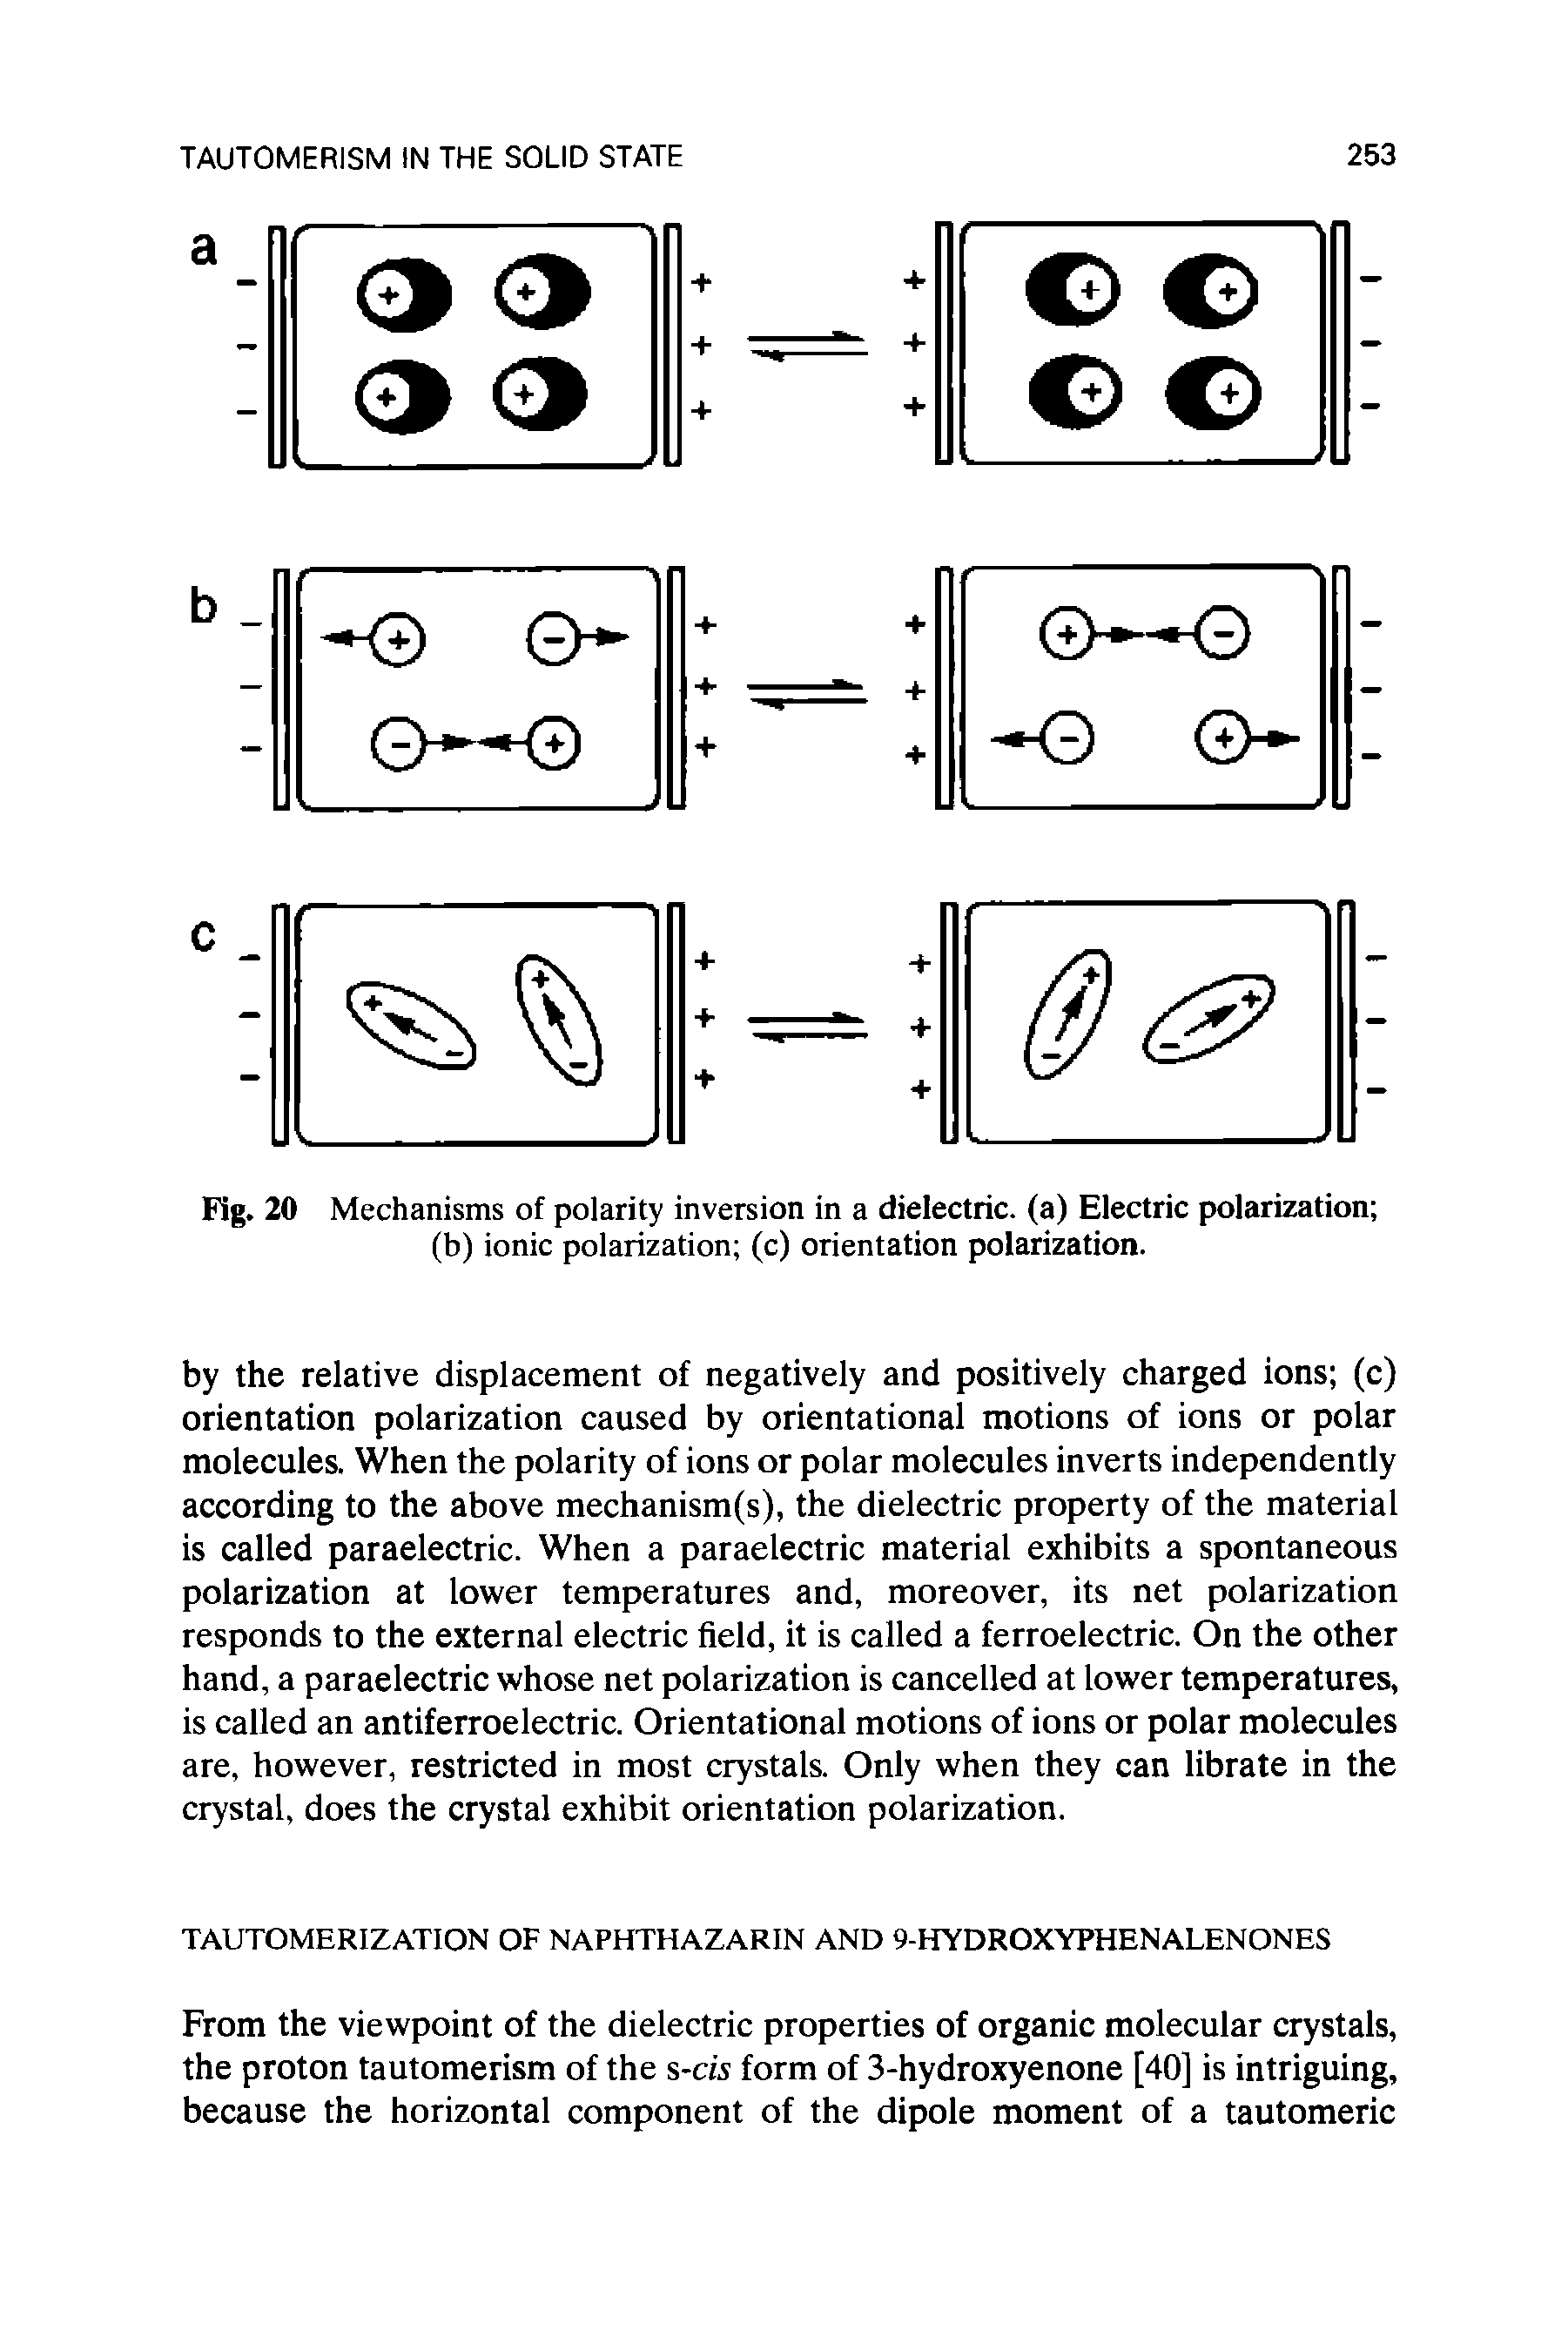 Fig. 20 Mechanisms of polarity inversion in a dielectric, (a) Electric polarization (b) ionic polarization (c) orientation polarization.